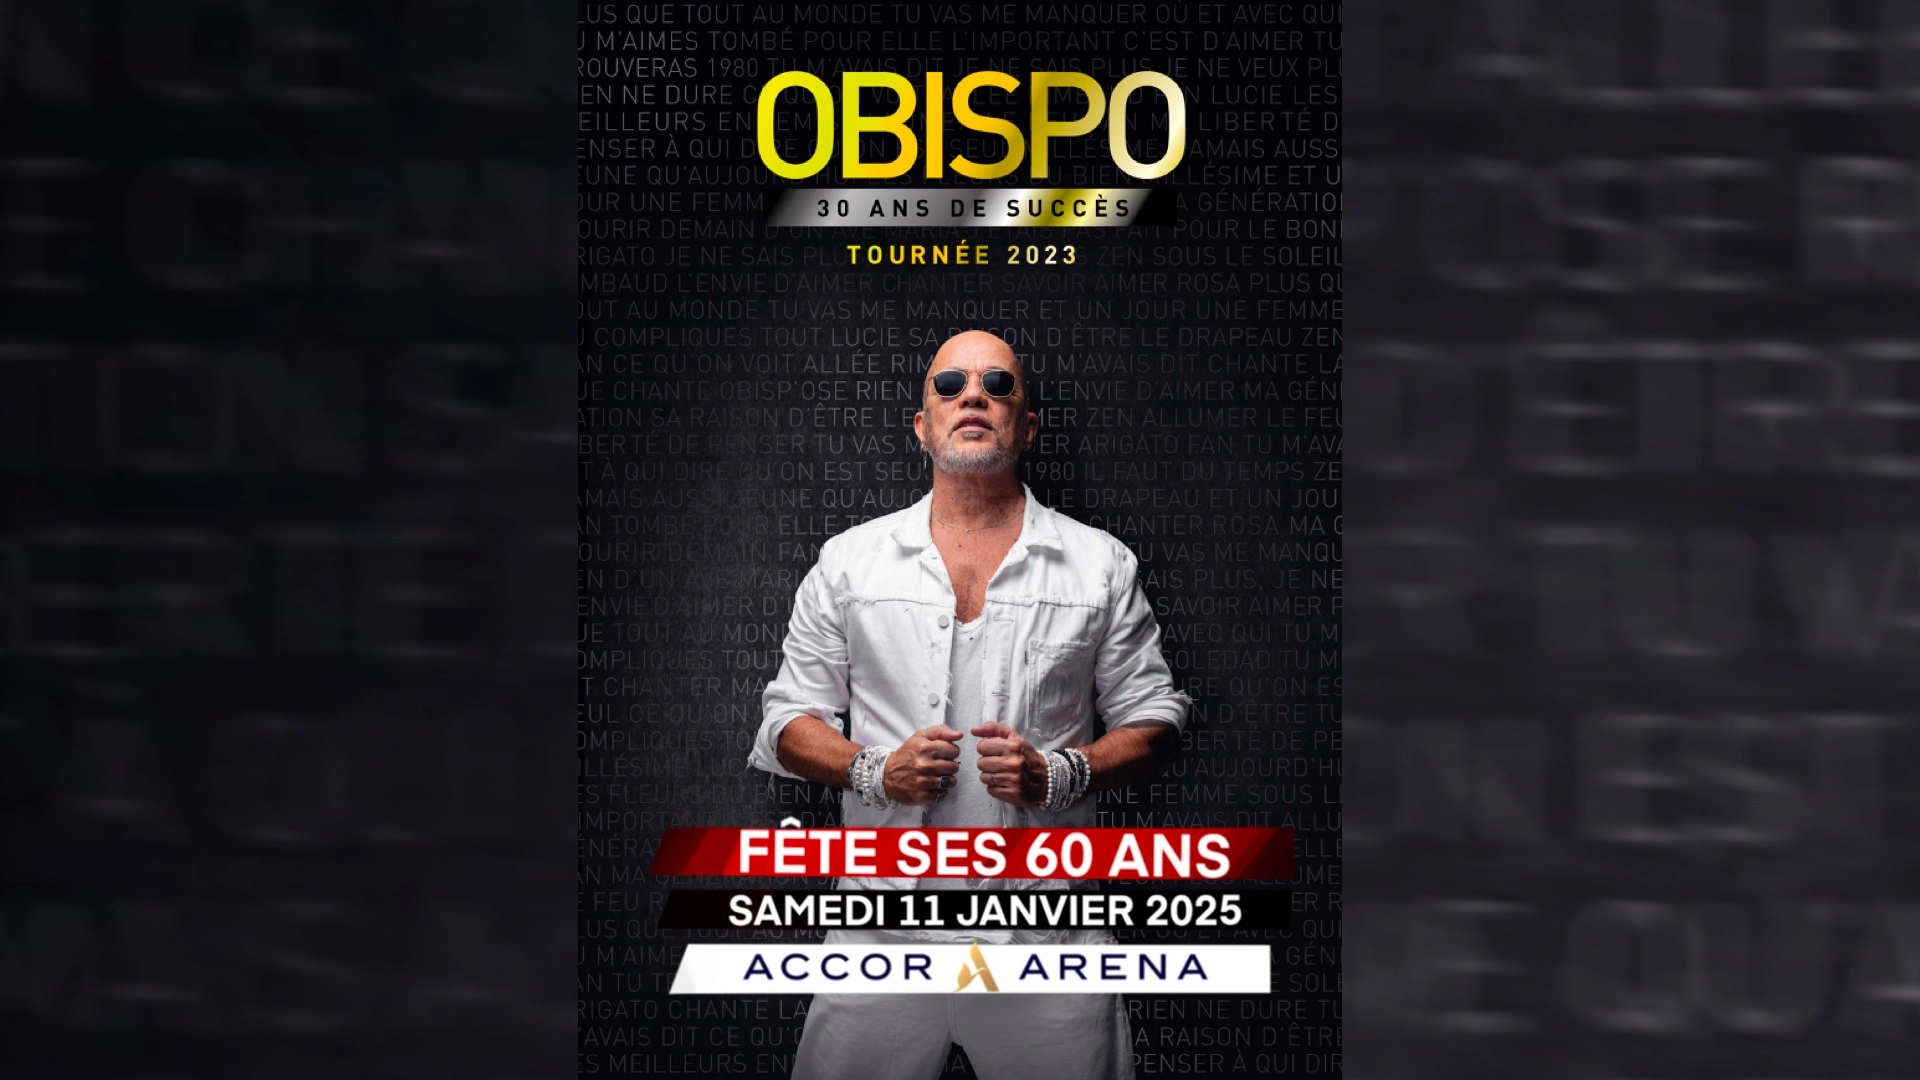 Pascal Obispo at Accor Arena Tickets